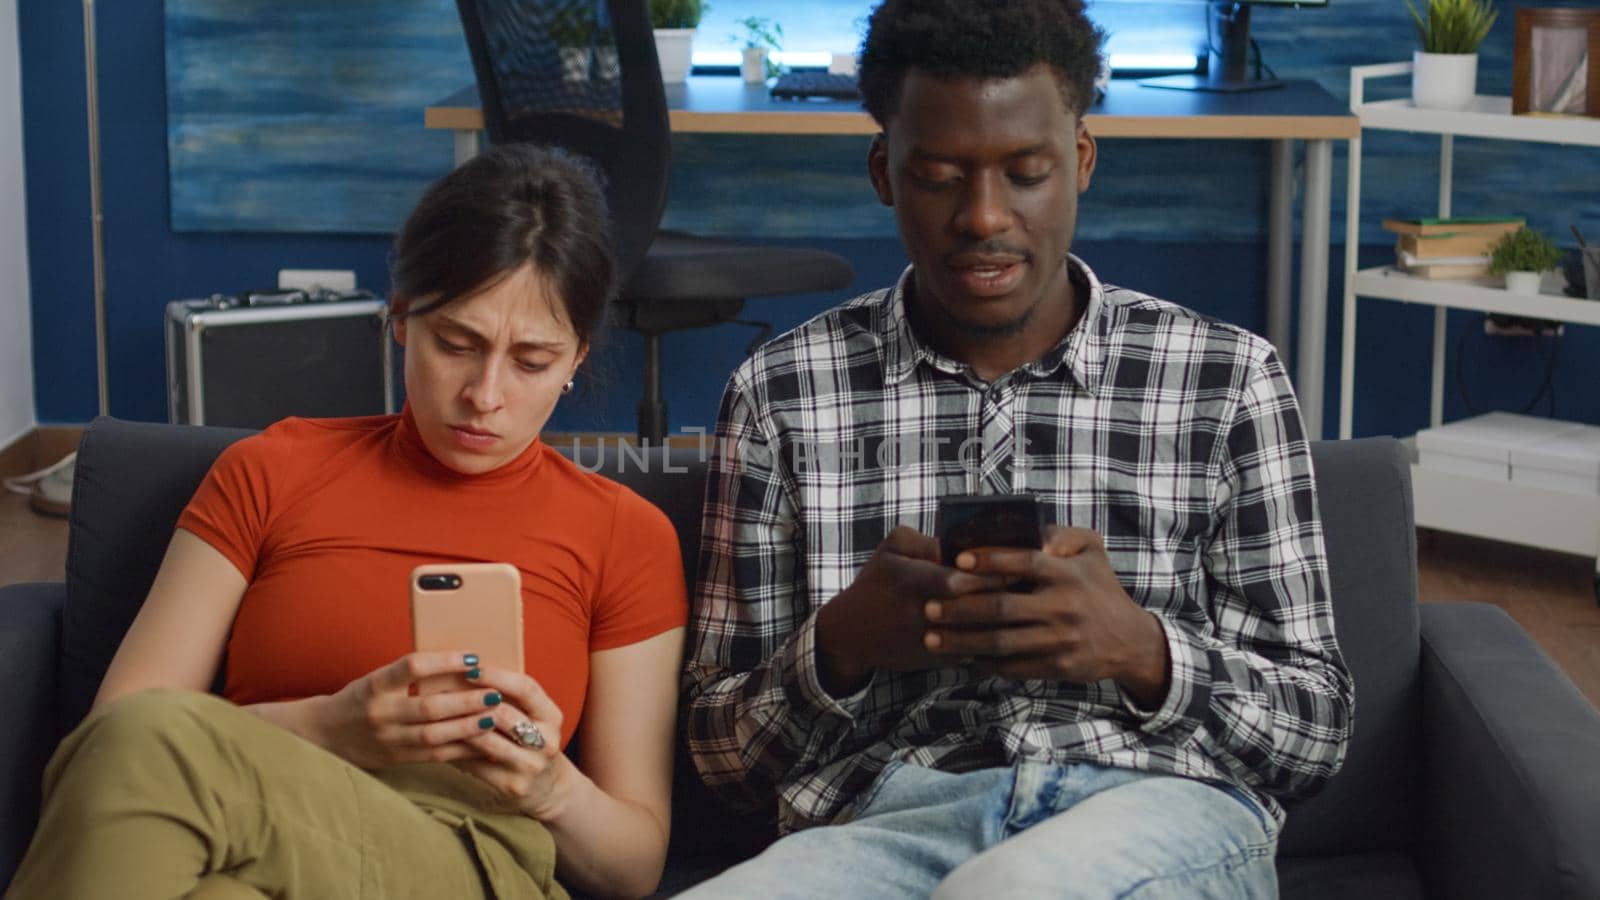 Interracial couple holding smartphones in living room by DCStudio